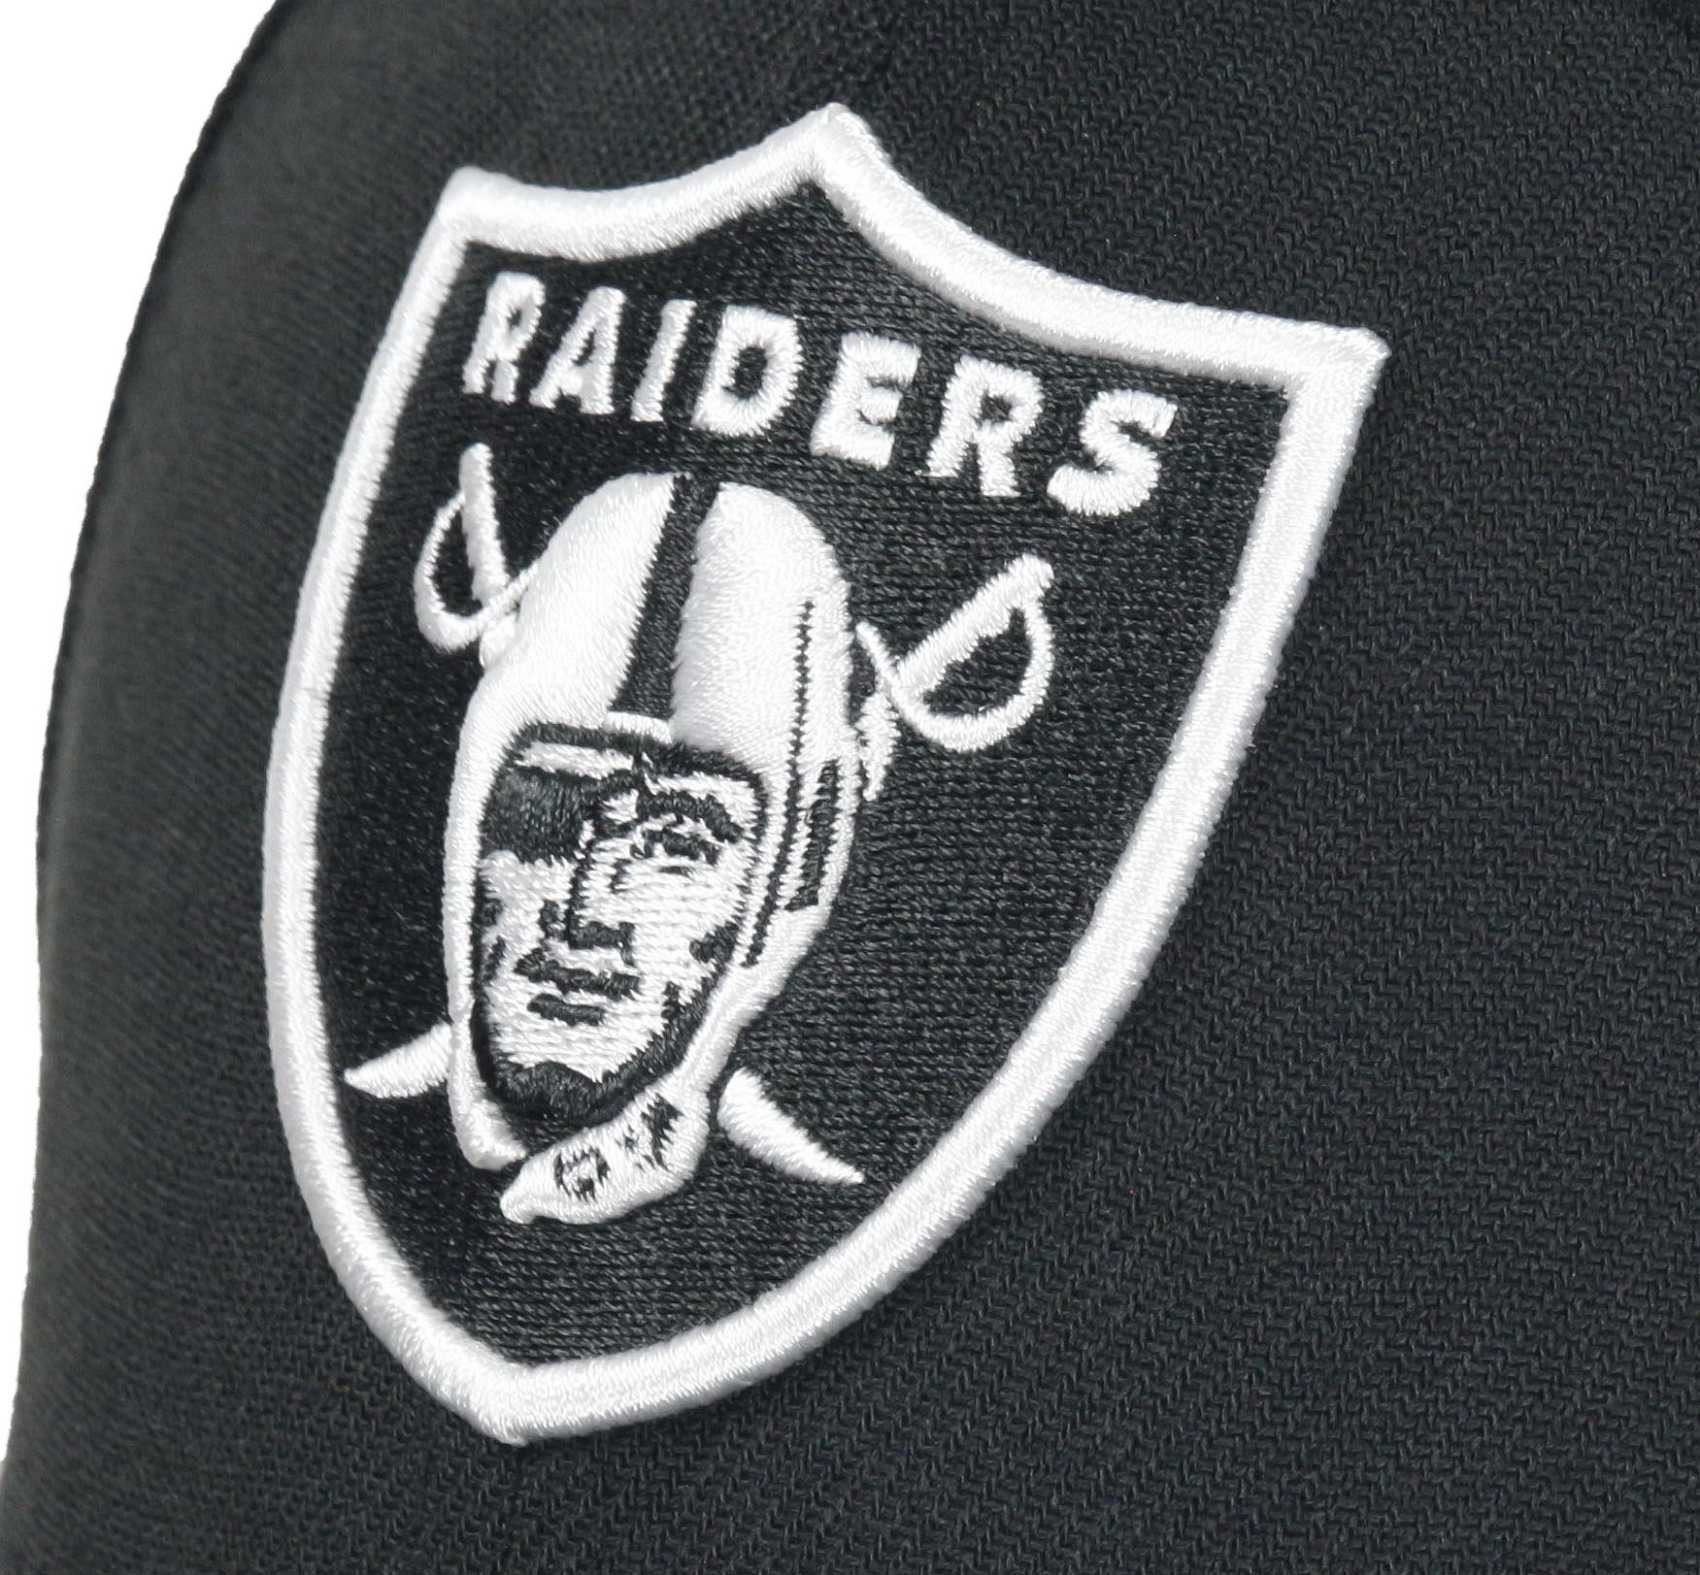 Las Vegas Raiders NFL Core Edition 39Thirty Stretch Cap New Era